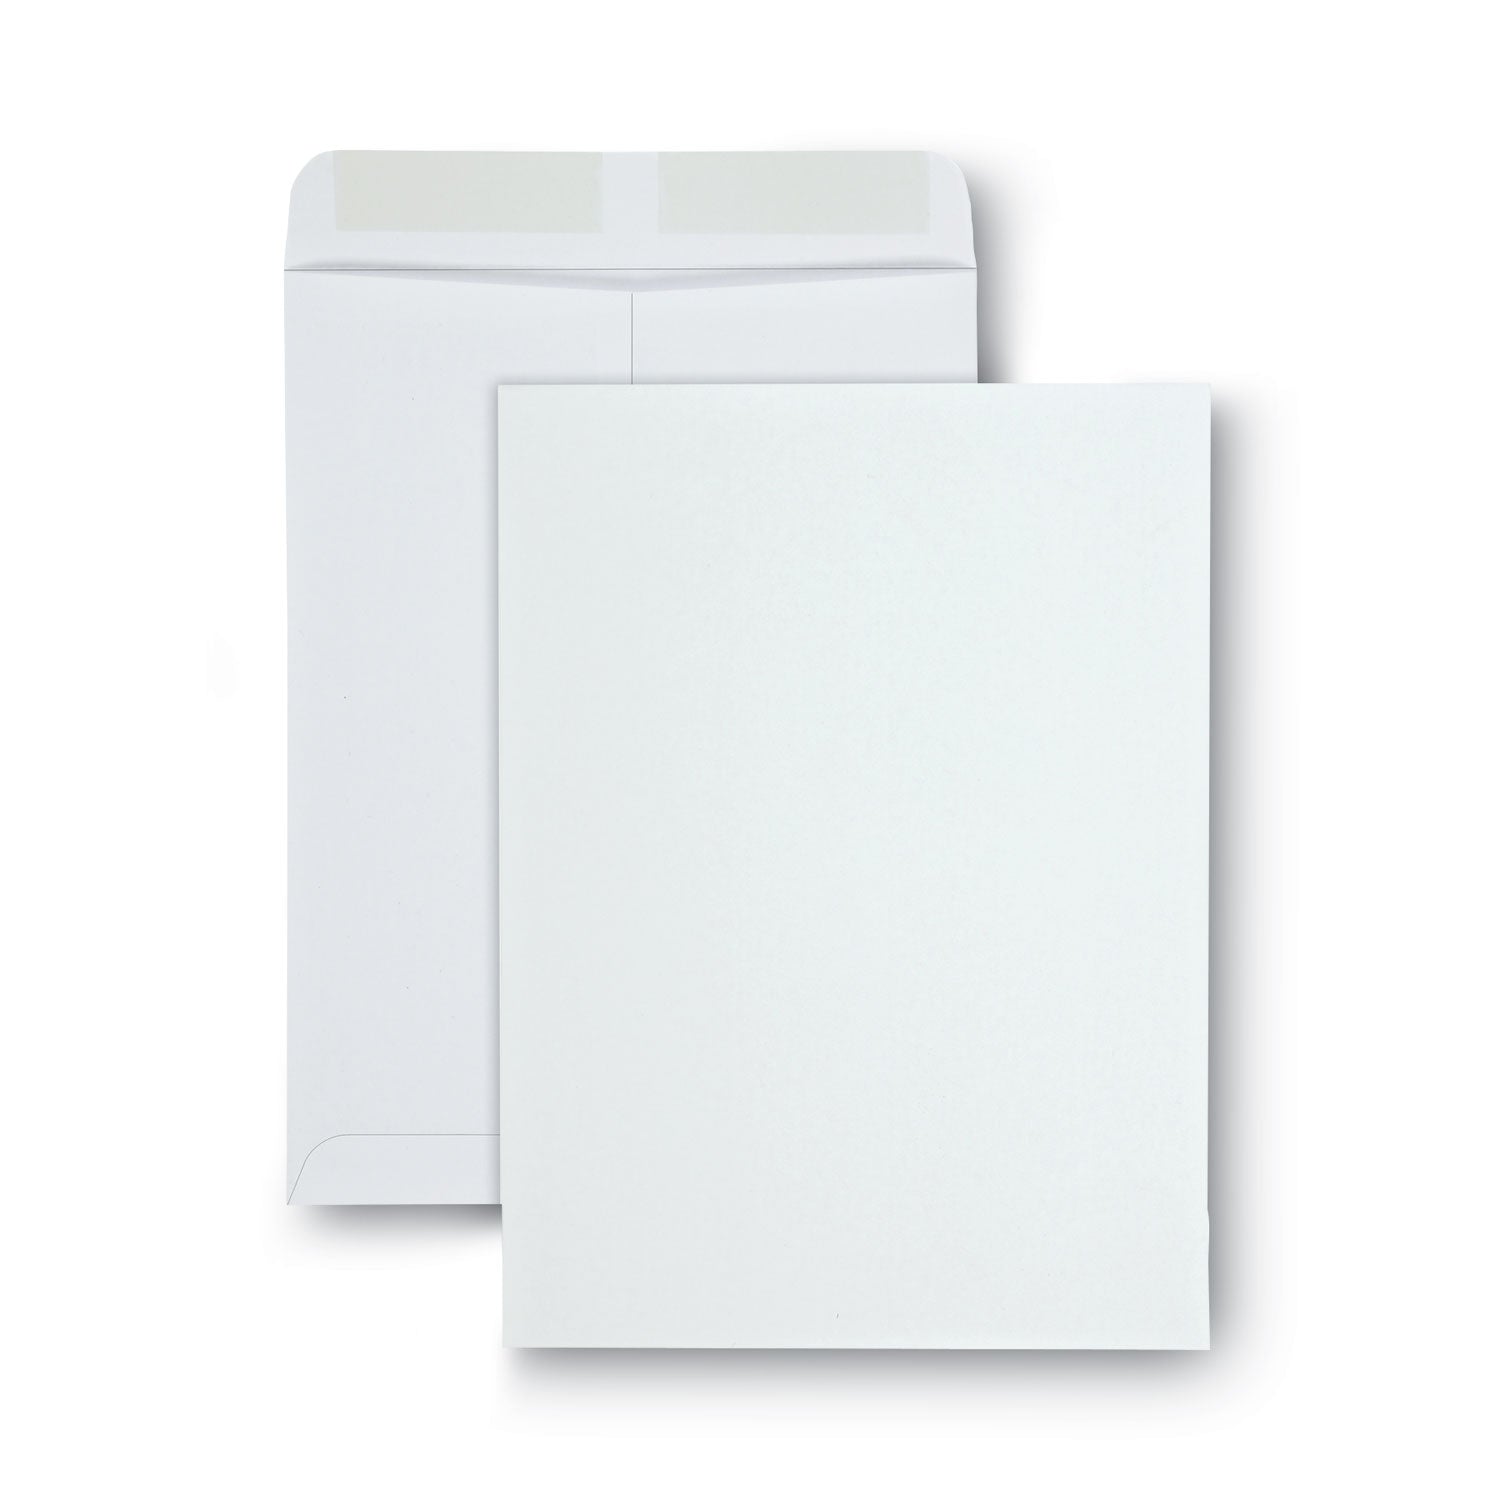 catalog-envelope-28-lb-bond-weight-paper-#10-1-2-square-flap-gummed-closure-9-x-12-white-100-box_unv44103 - 1